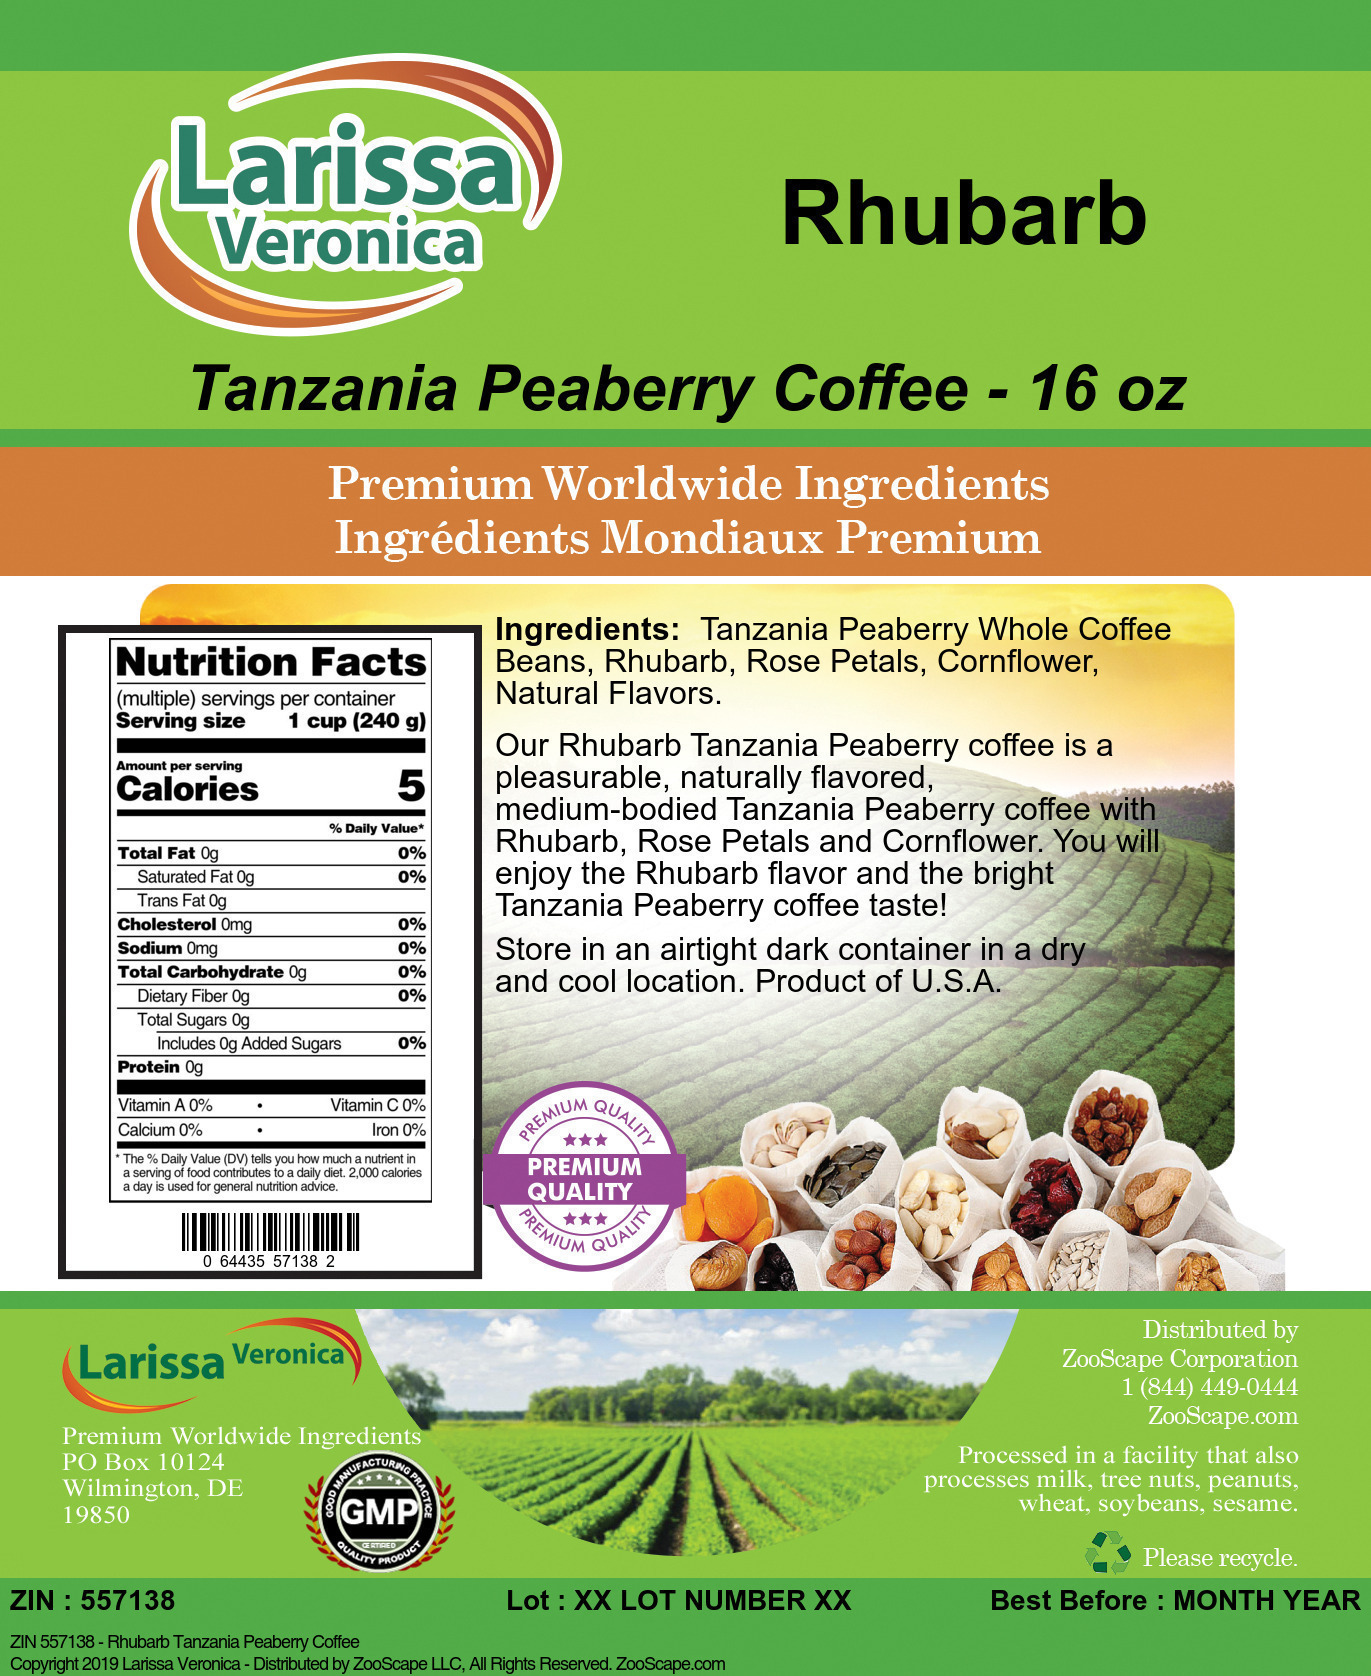 Rhubarb Tanzania Peaberry Coffee - Label